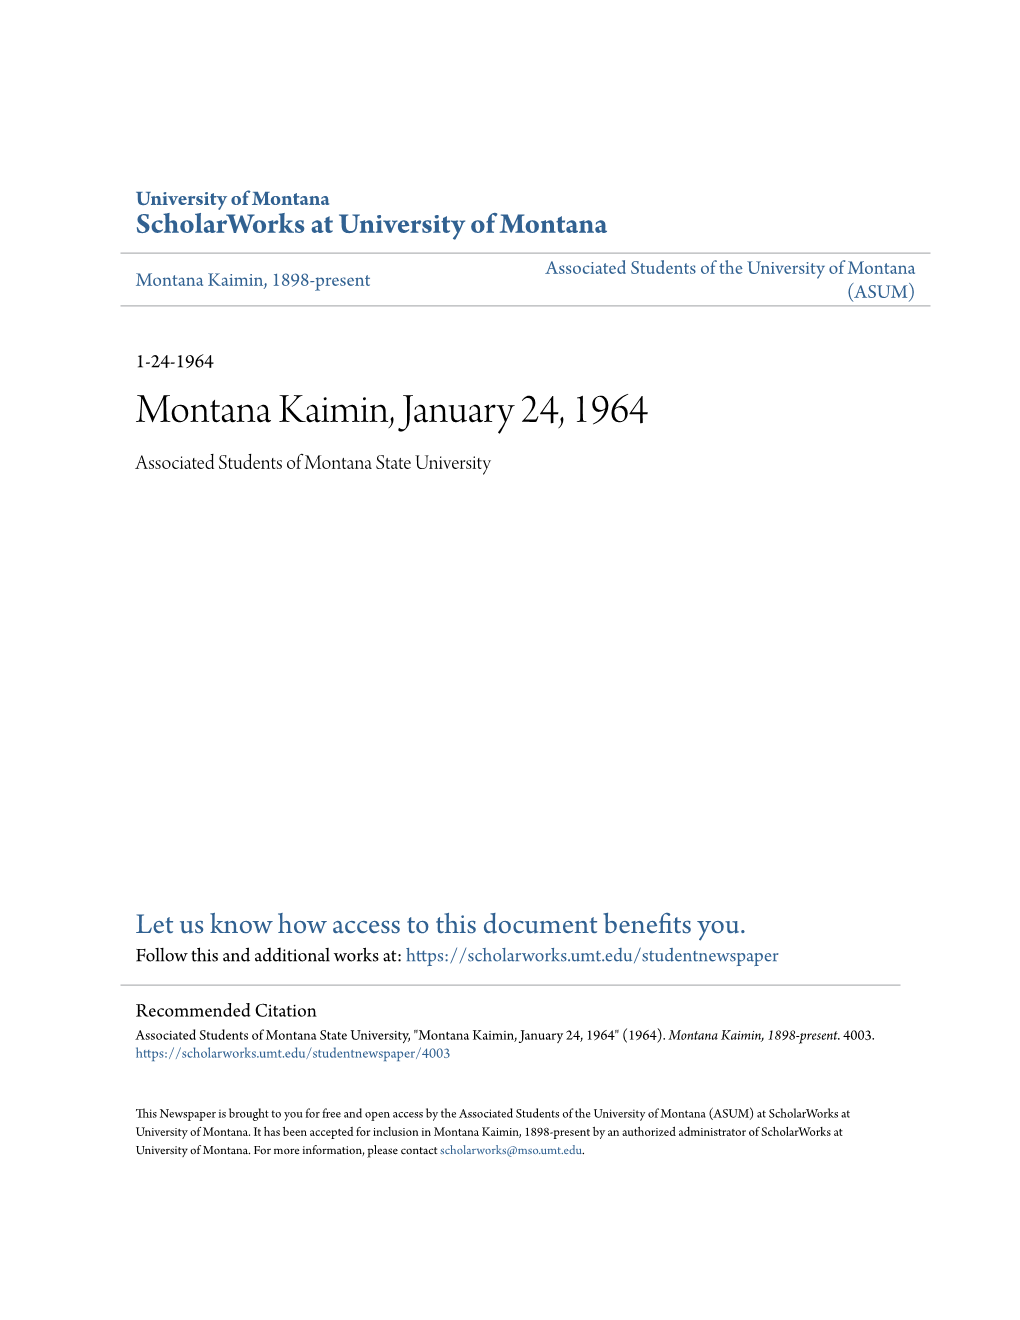 Montana Kaimin, January 24, 1964 Associated Students of Montana State University